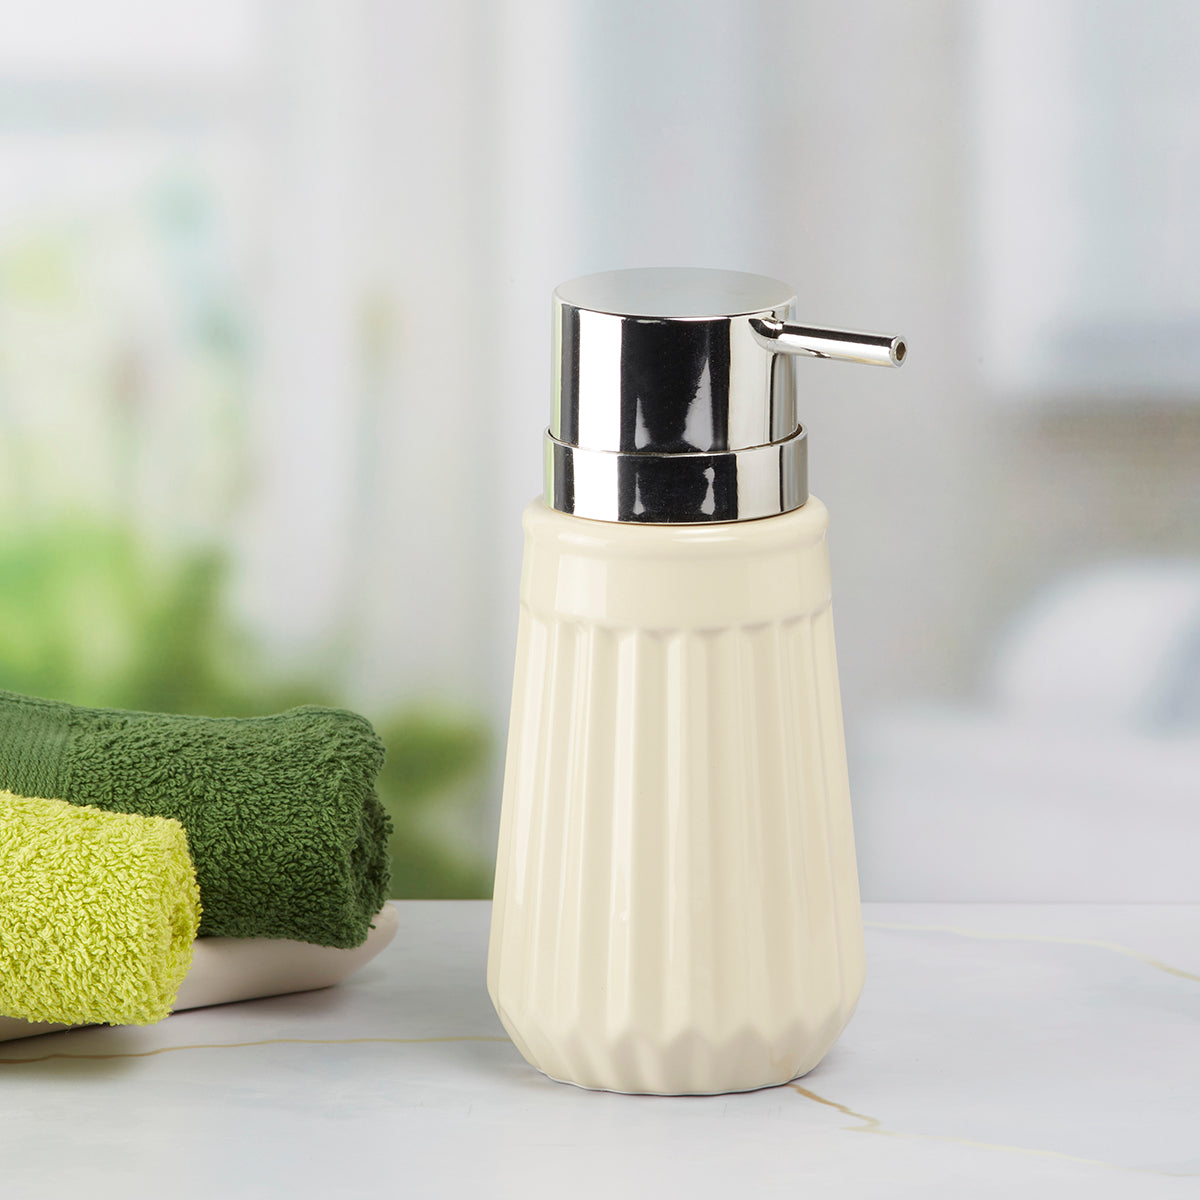 Kookee Ceramic Soap Dispenser for Bathroom handwash, refillable pump bottle for Kitchen hand wash basin, Set of 1, Cream (7981)